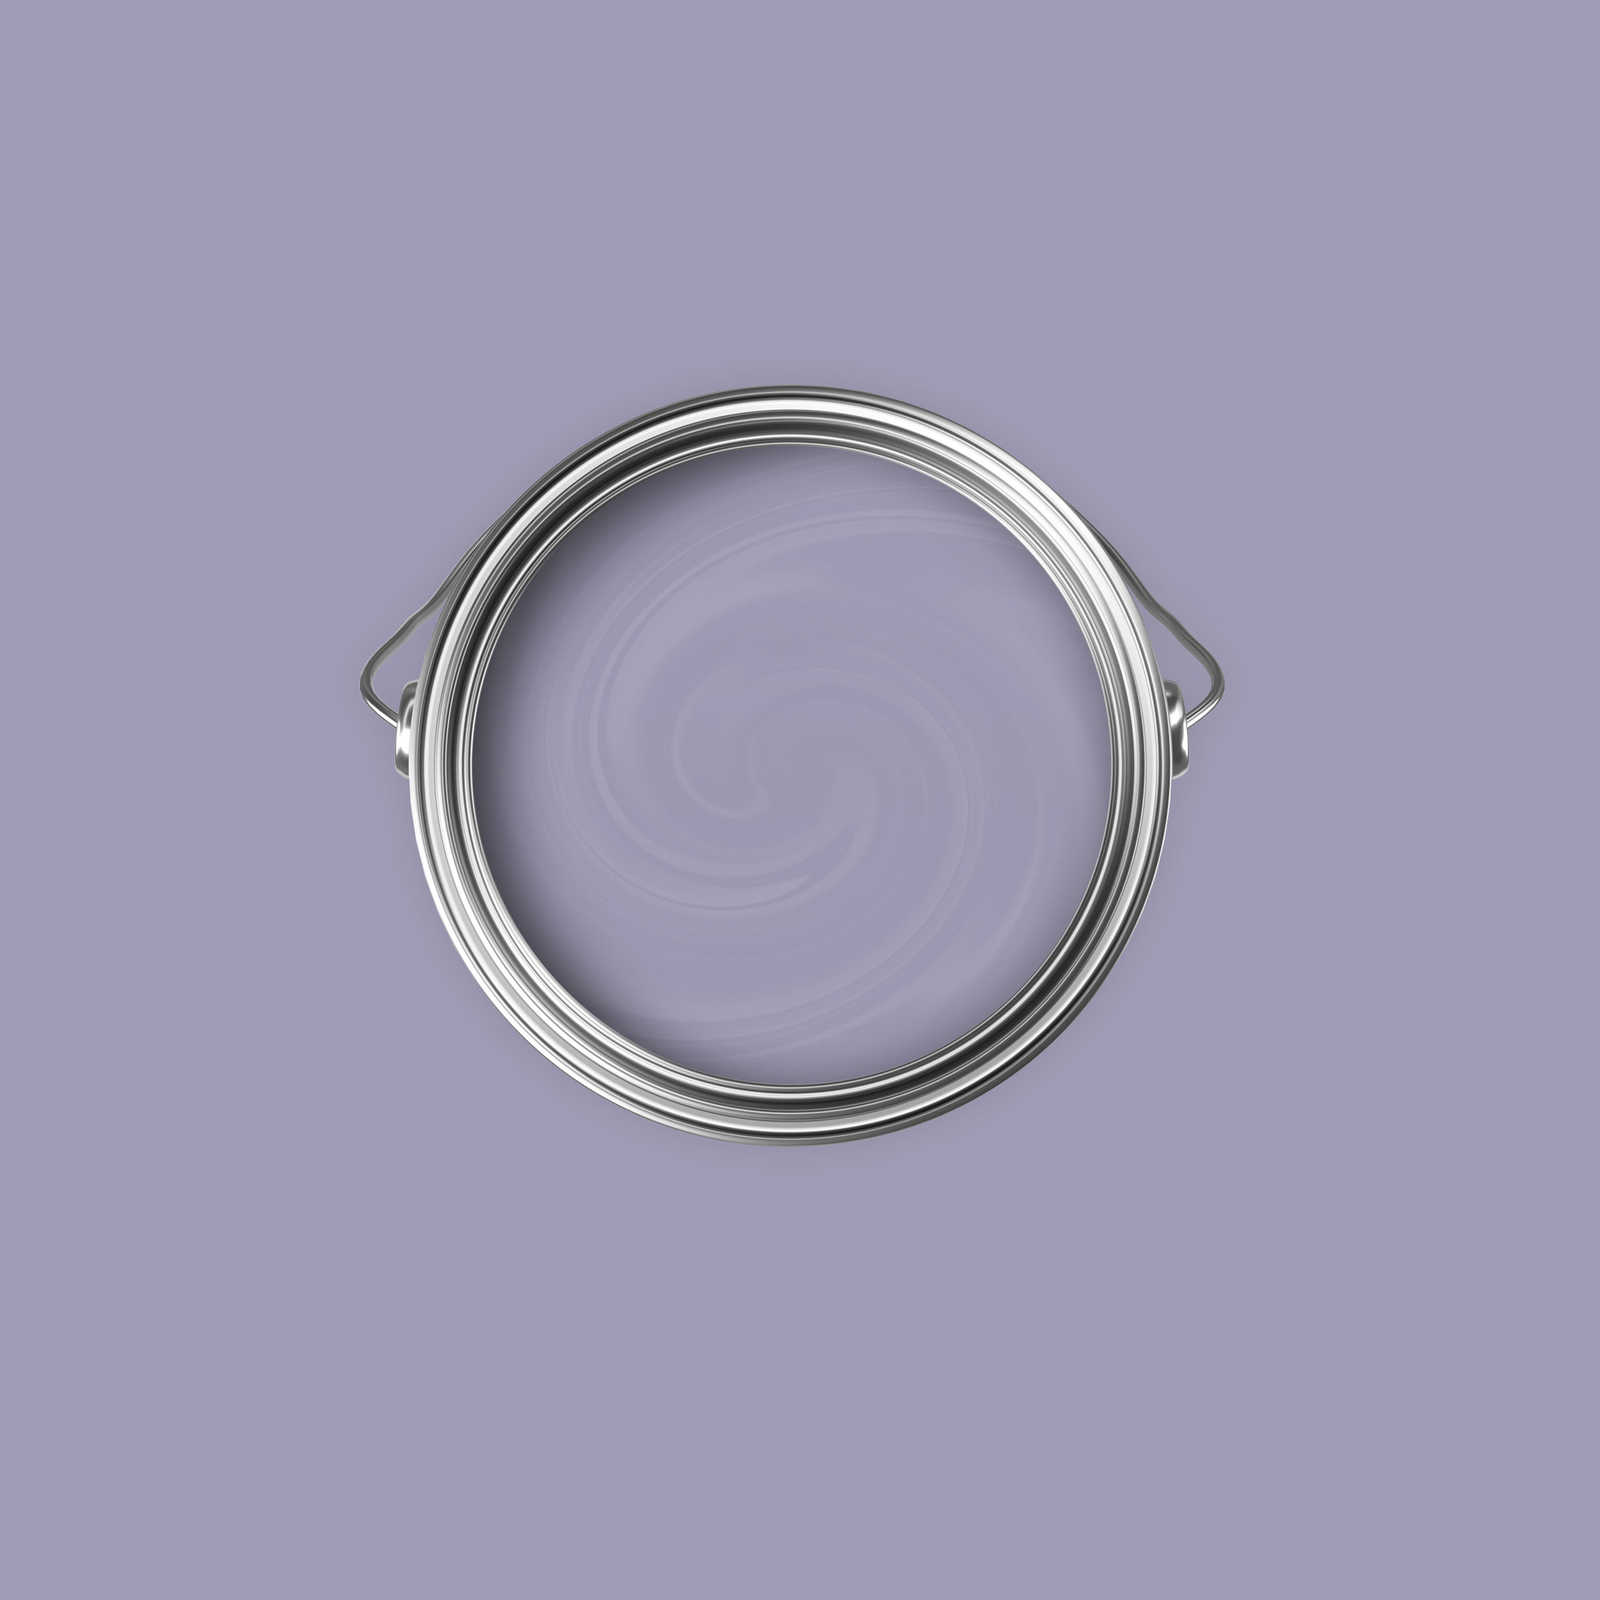             Premium Wall Paint Sensitive Lilac »Magical Mauve« NW204 – 2.5 litre
        